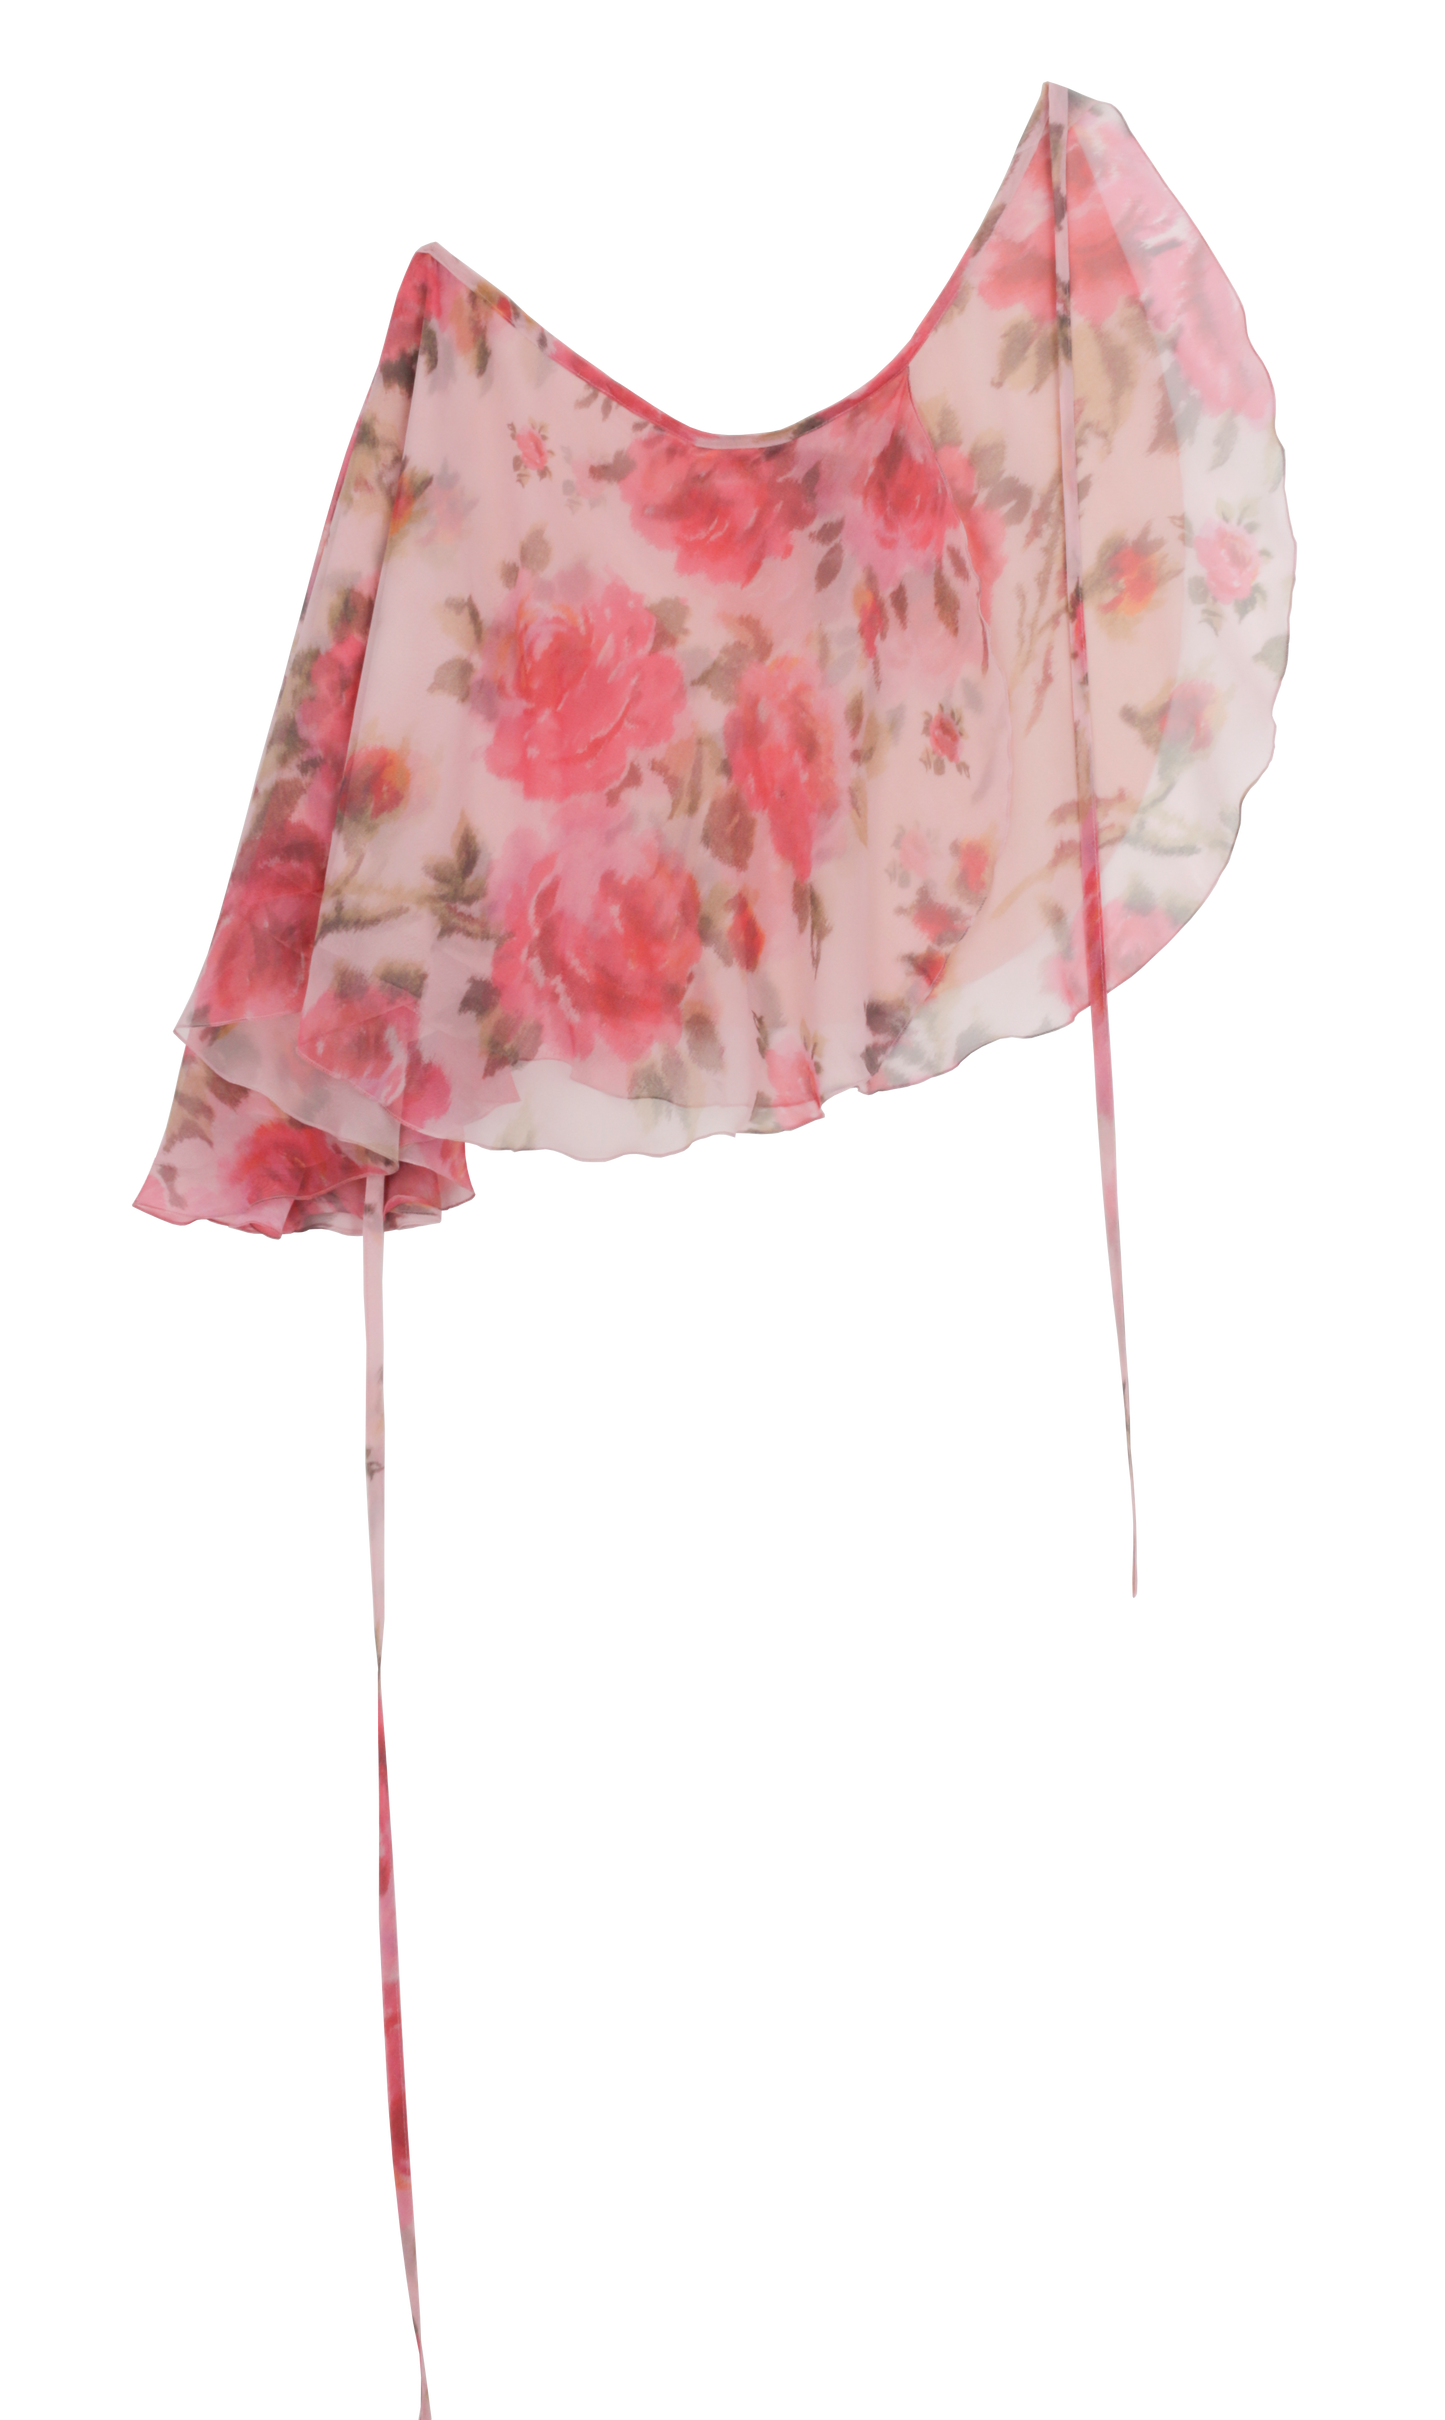 Ballet Chiffon Wrap Skirt in vintage rose